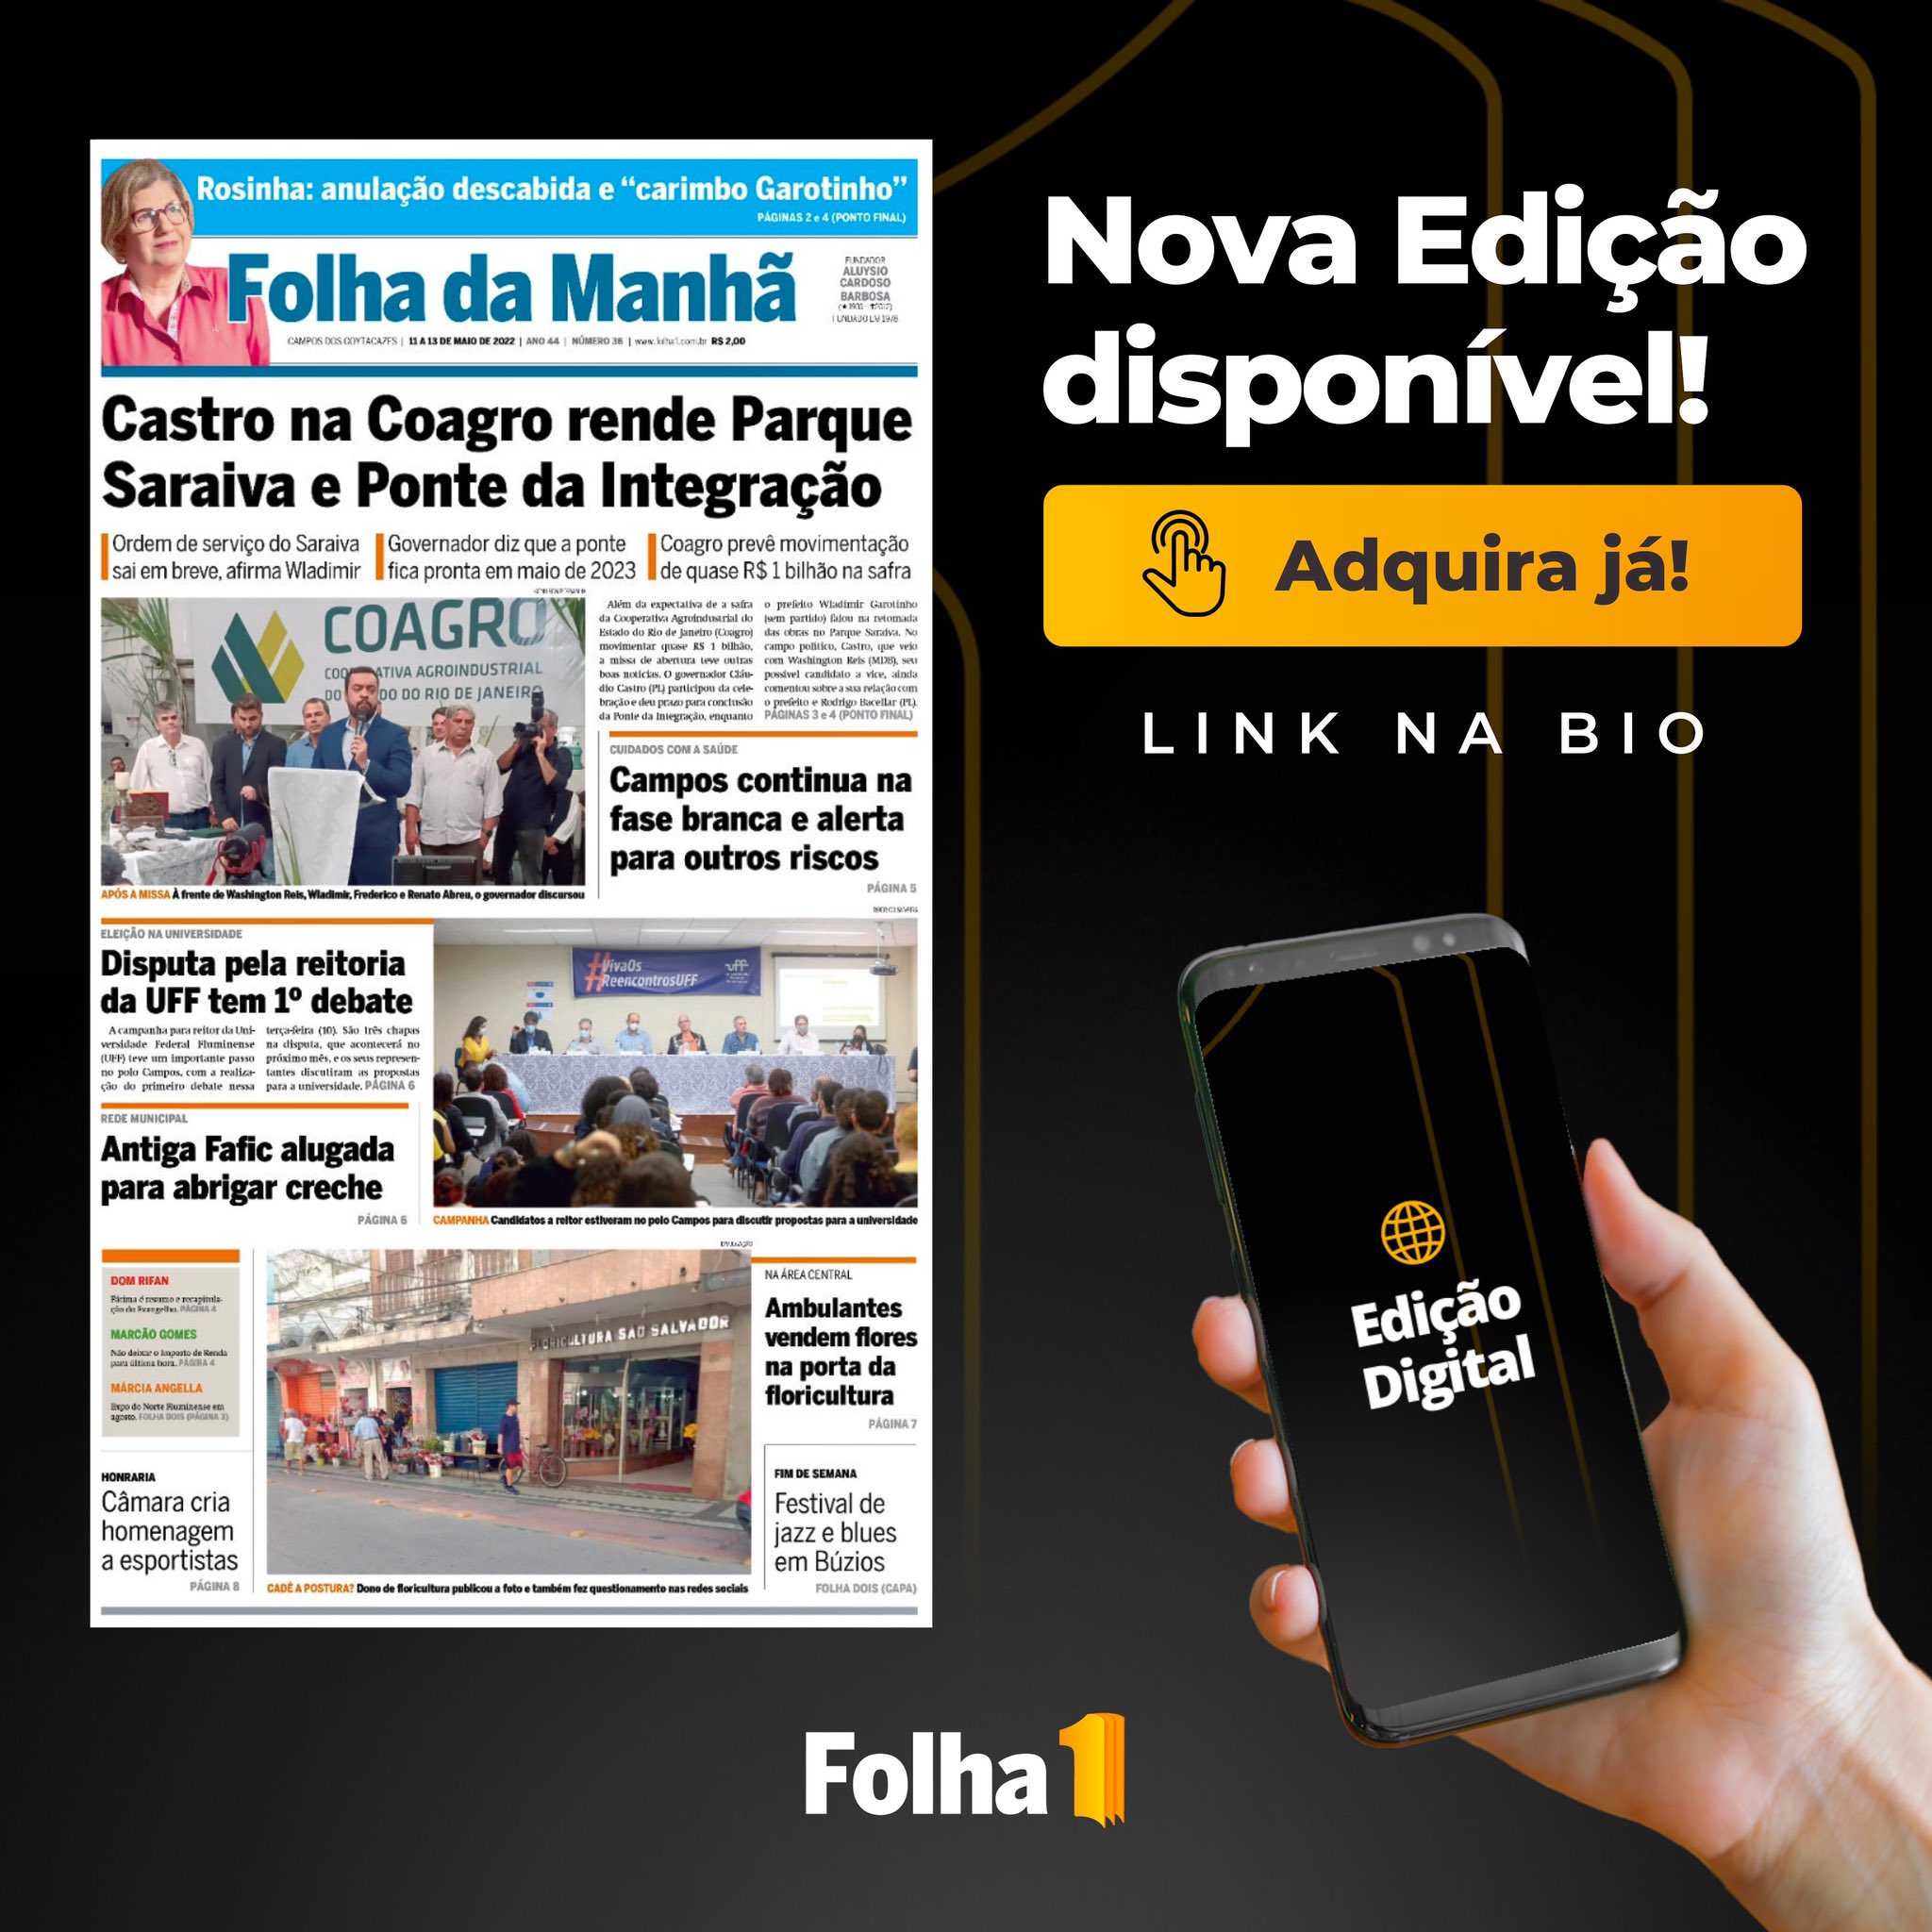 Folha 1 (@Folha1_) / Twitter